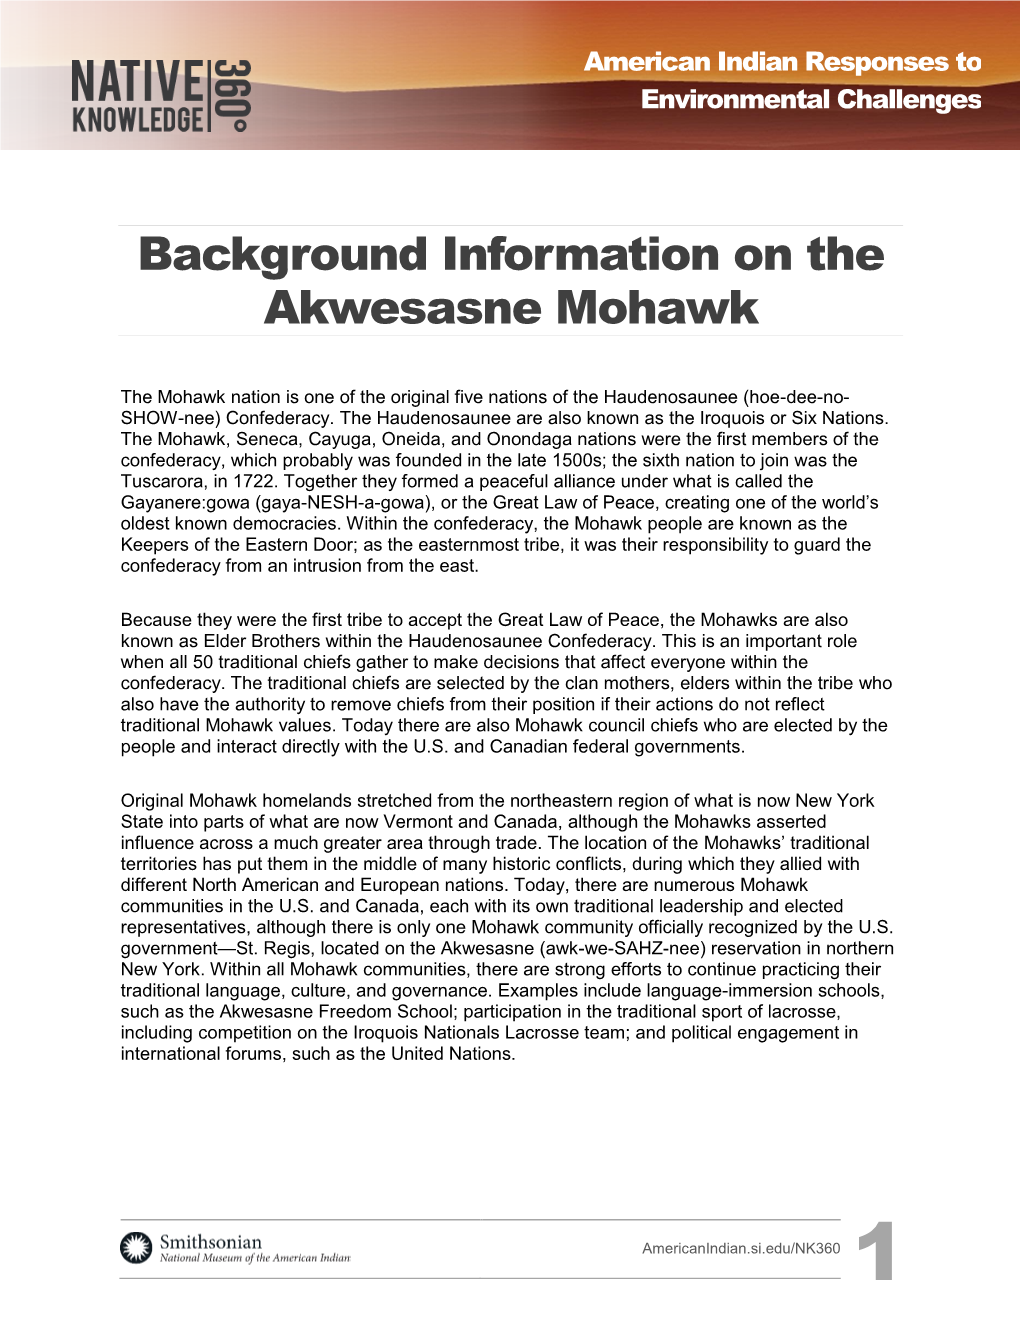 Background Information on the Akwesasne Mohawk